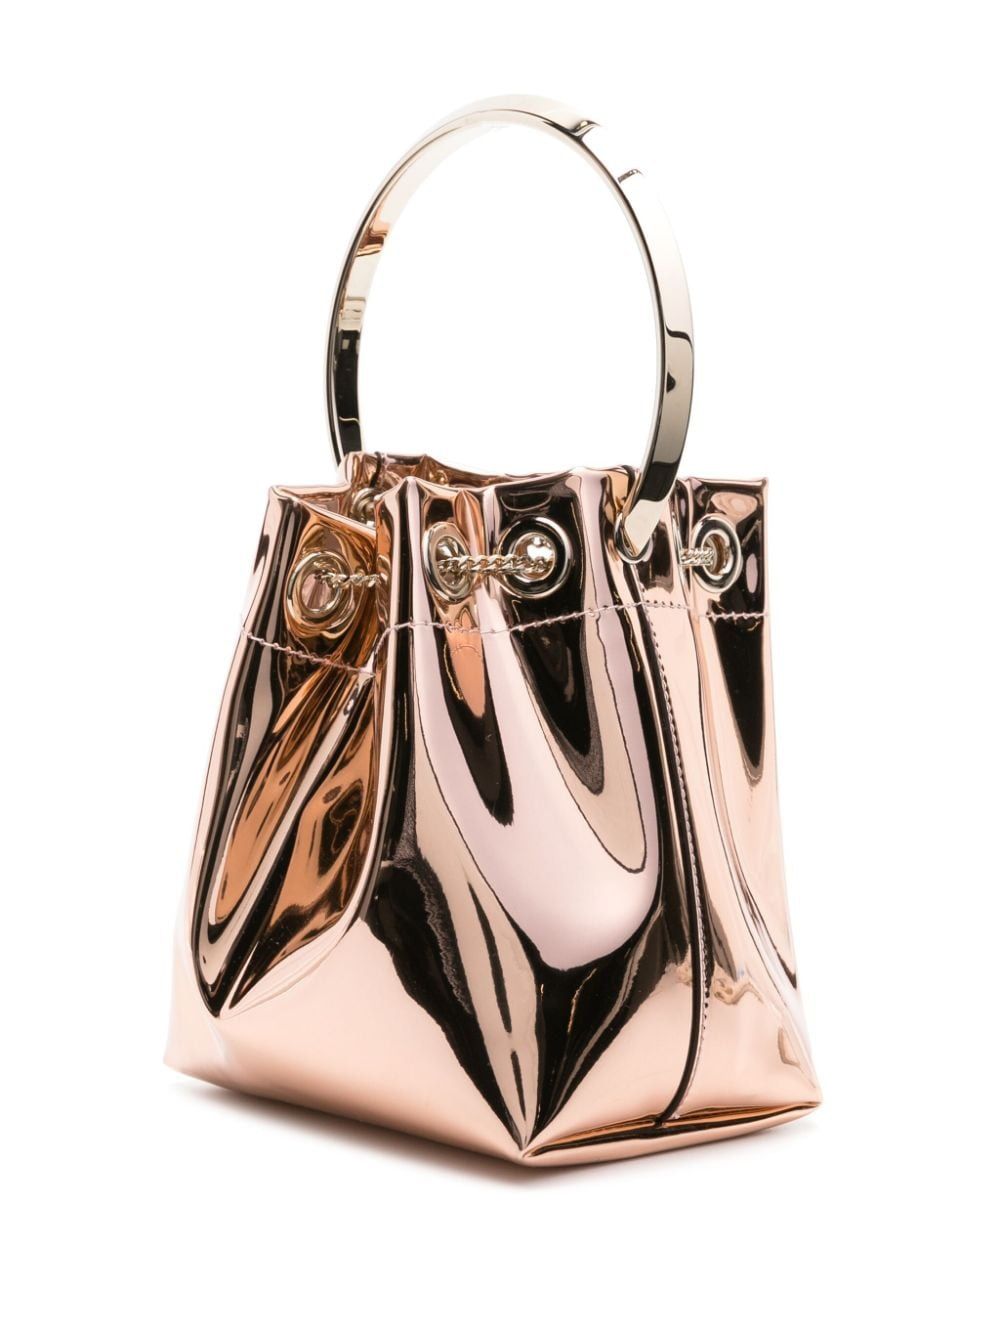 JIMMY CHOO Mini Bon Bon Pink Gold Mirrored Fabric Handbag with Metal Handle and Chain Details, 14x15x9.5 cm